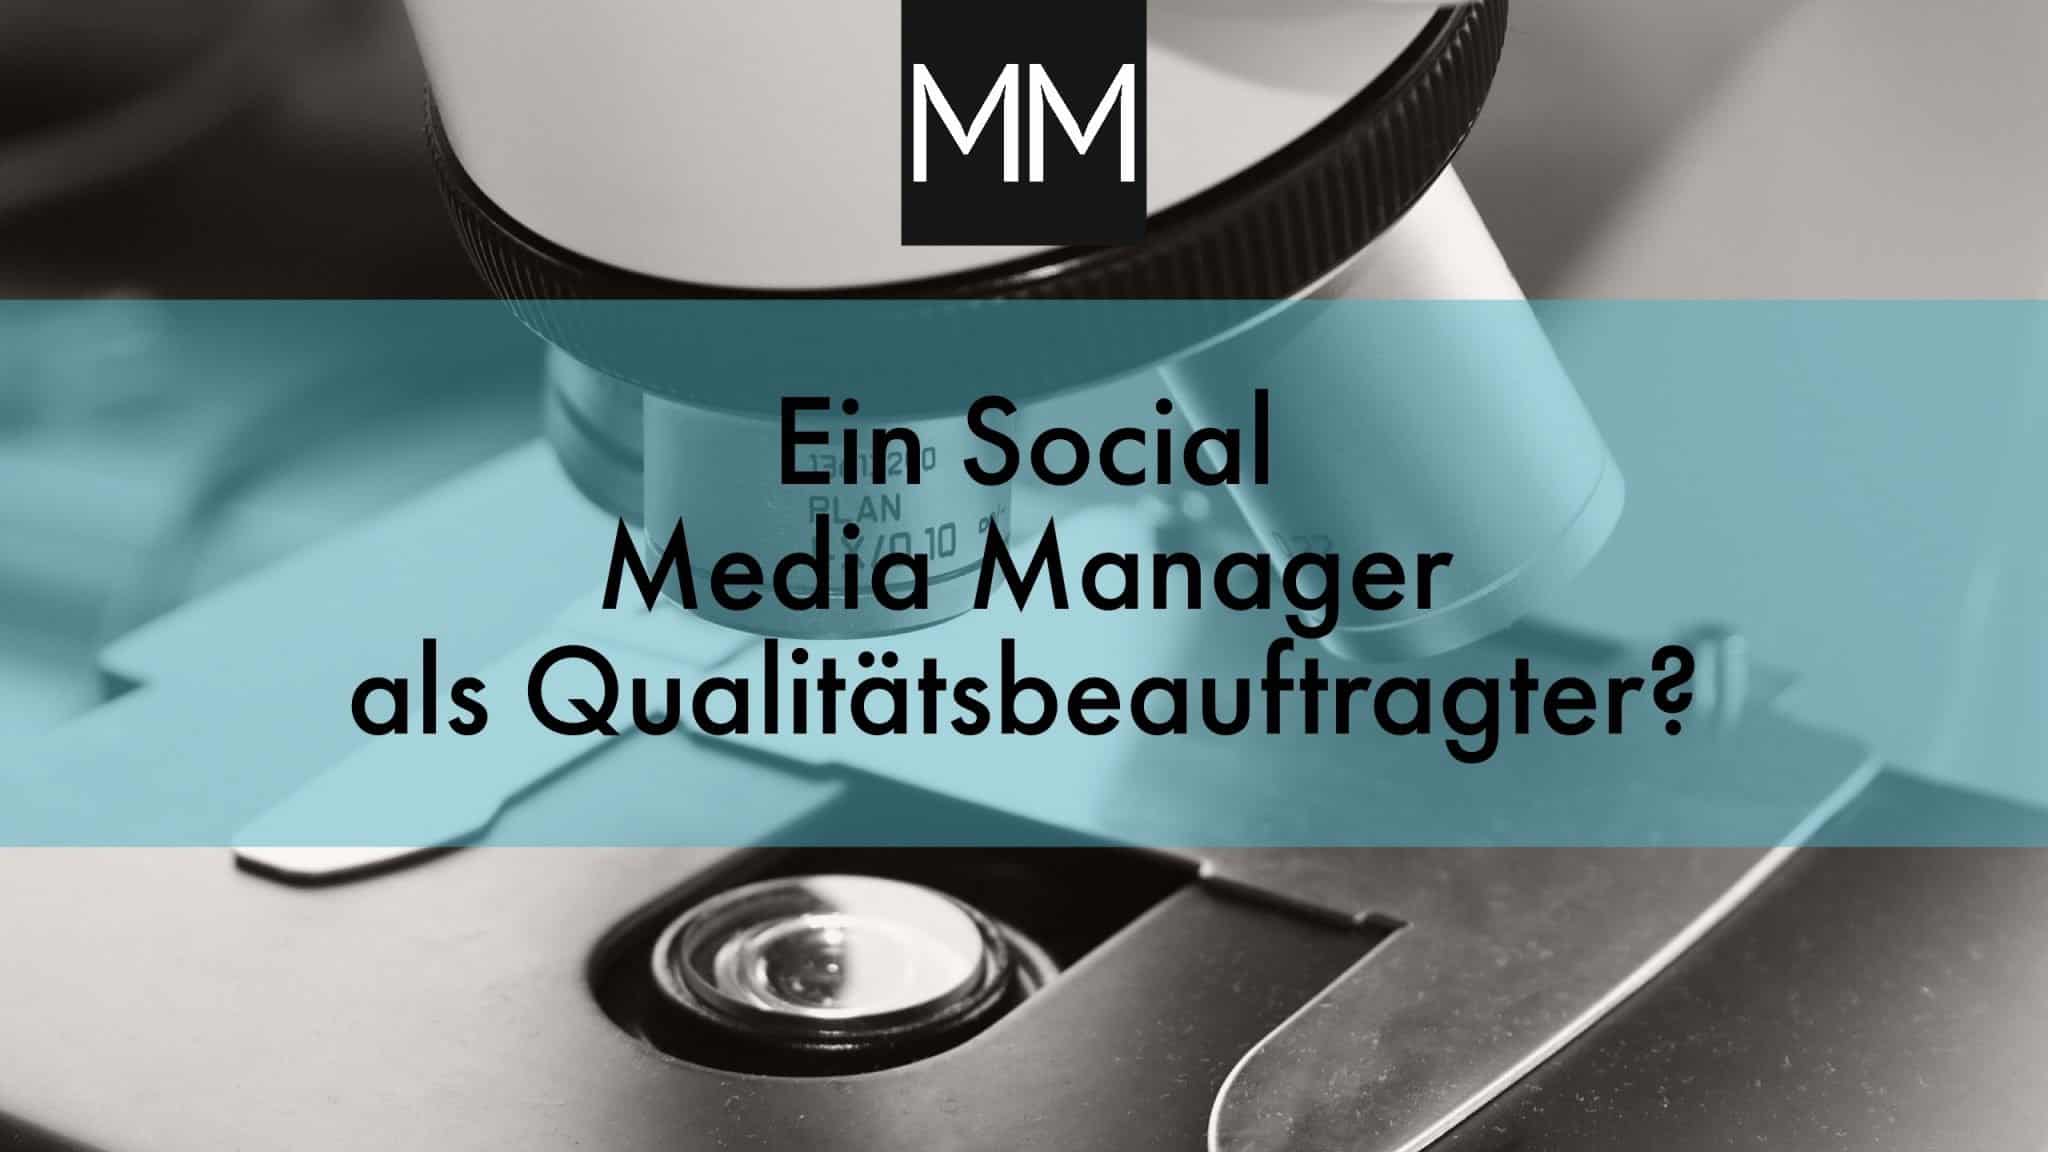 Ein Social Media Manager als Qualitätsbeauftragter? MeissnerMedia